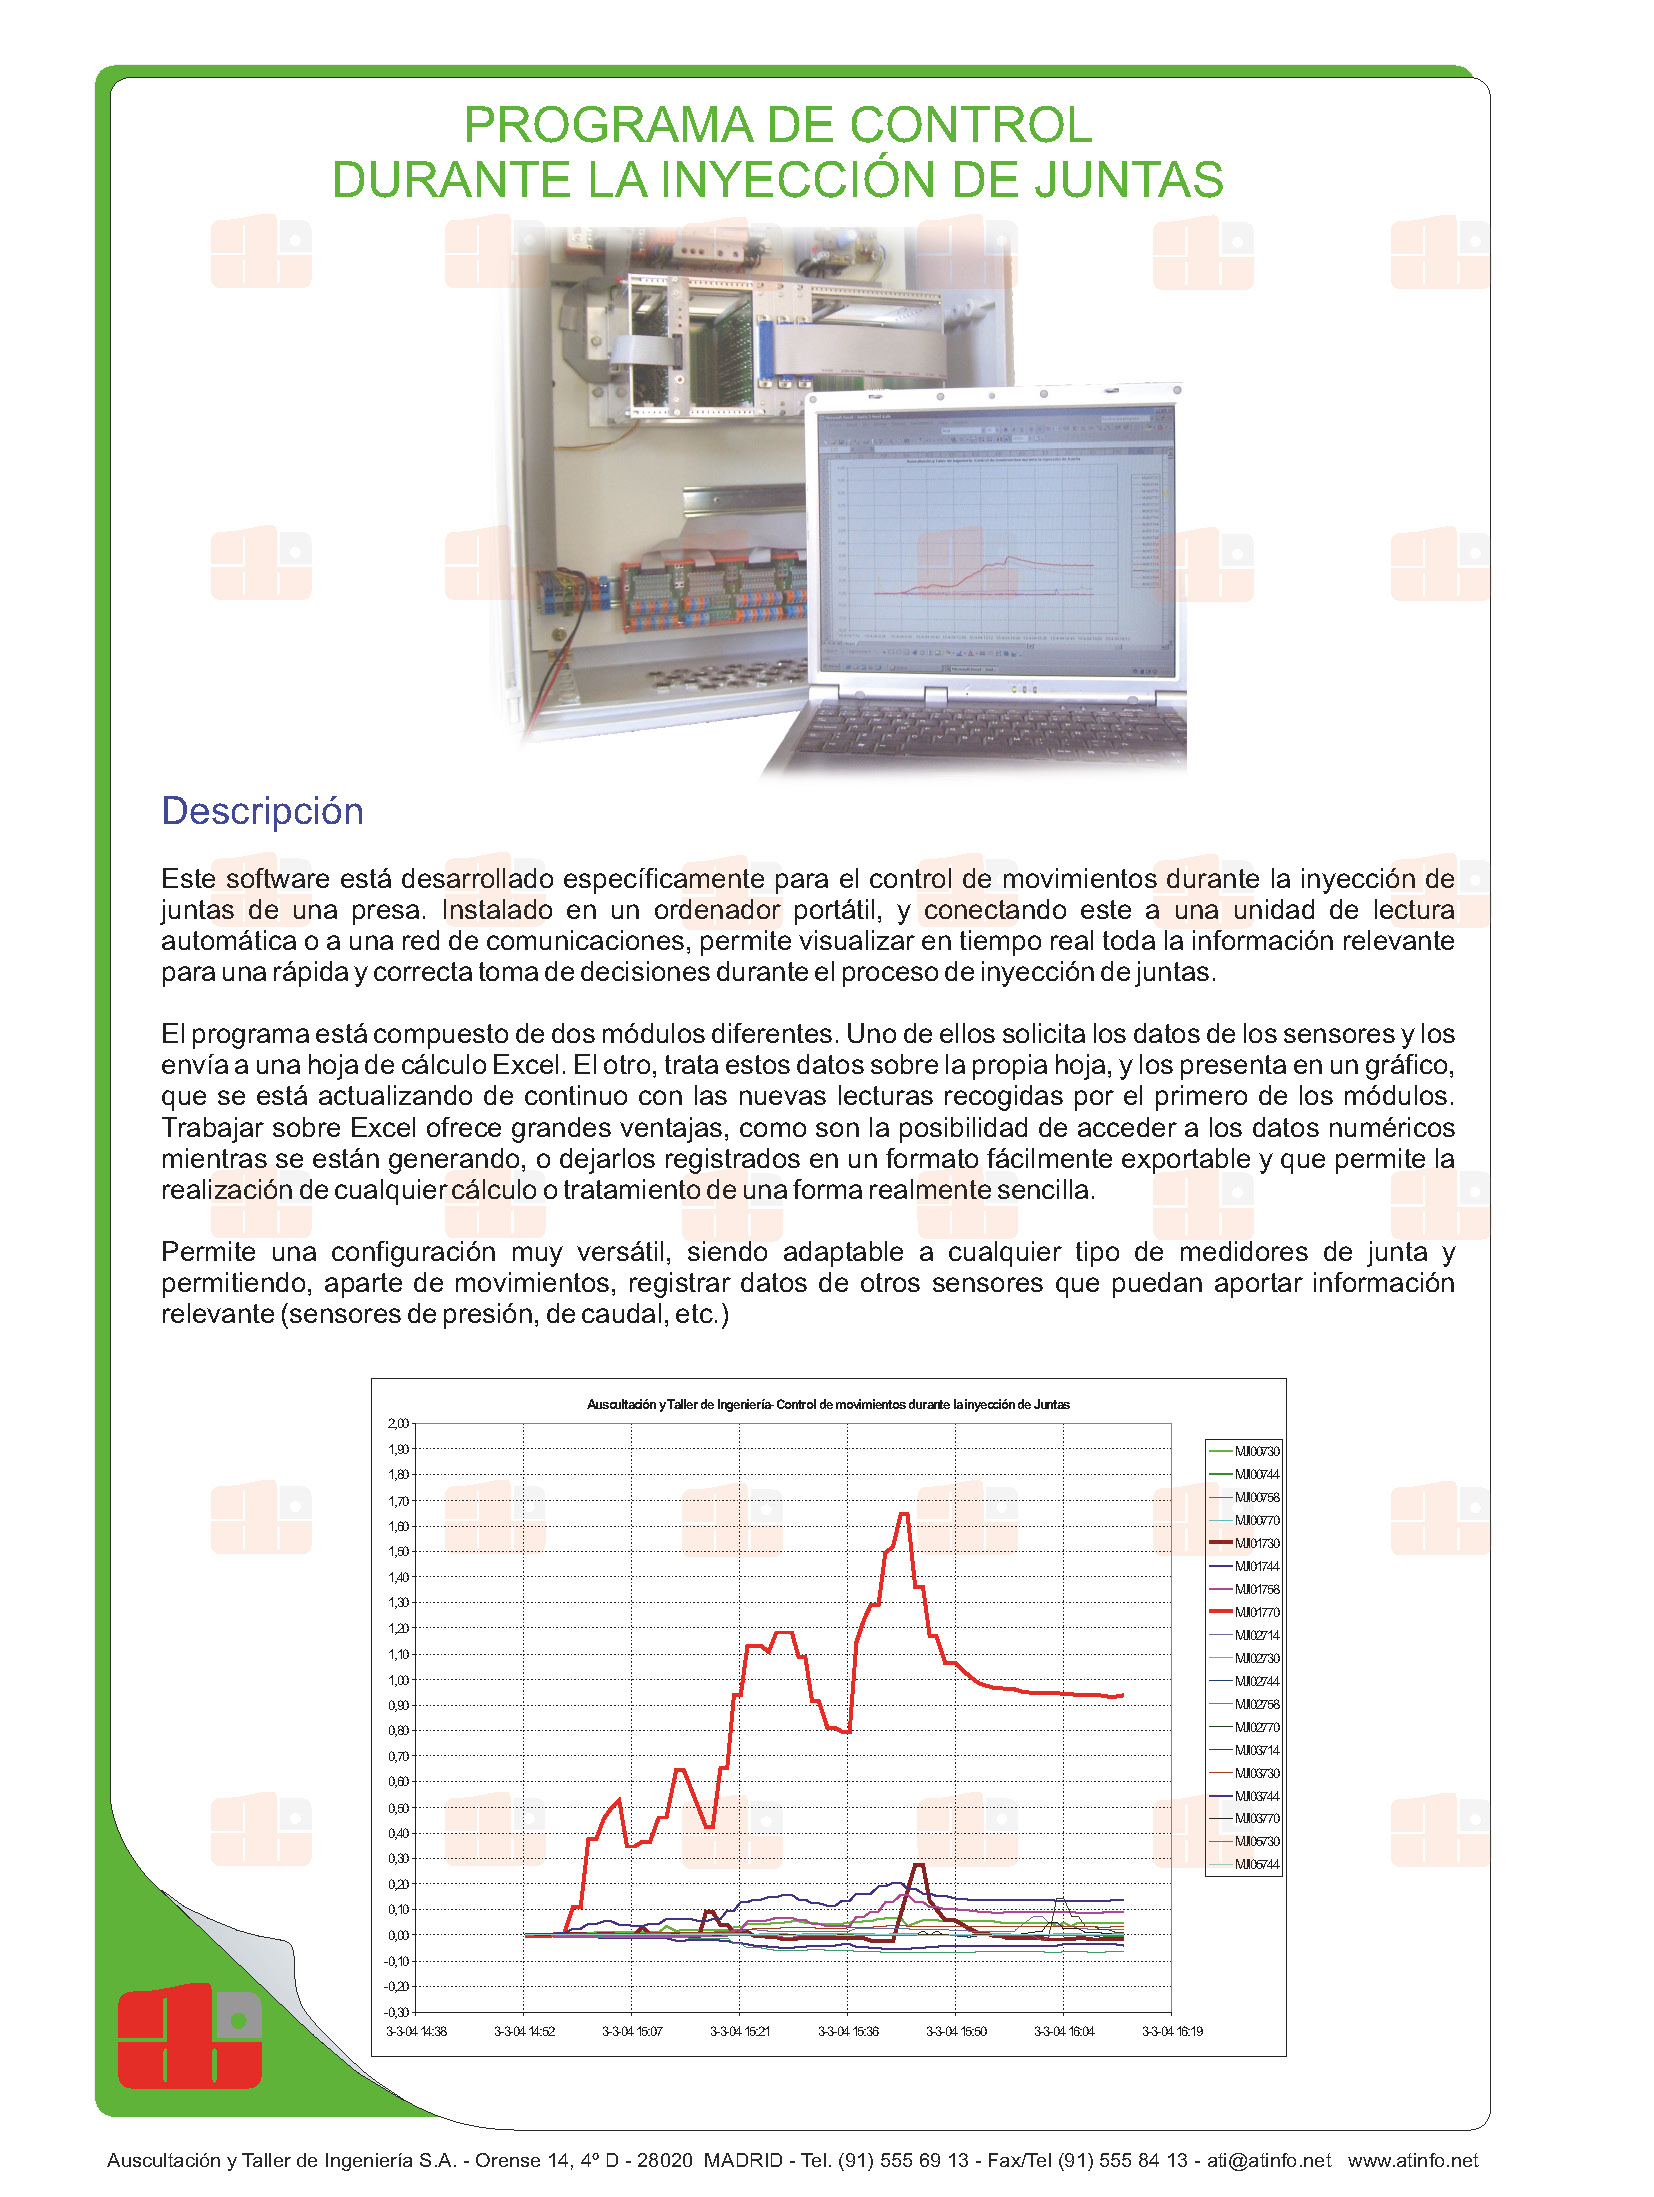 auscultacion-ingenieria-atinfo-software-control-datos